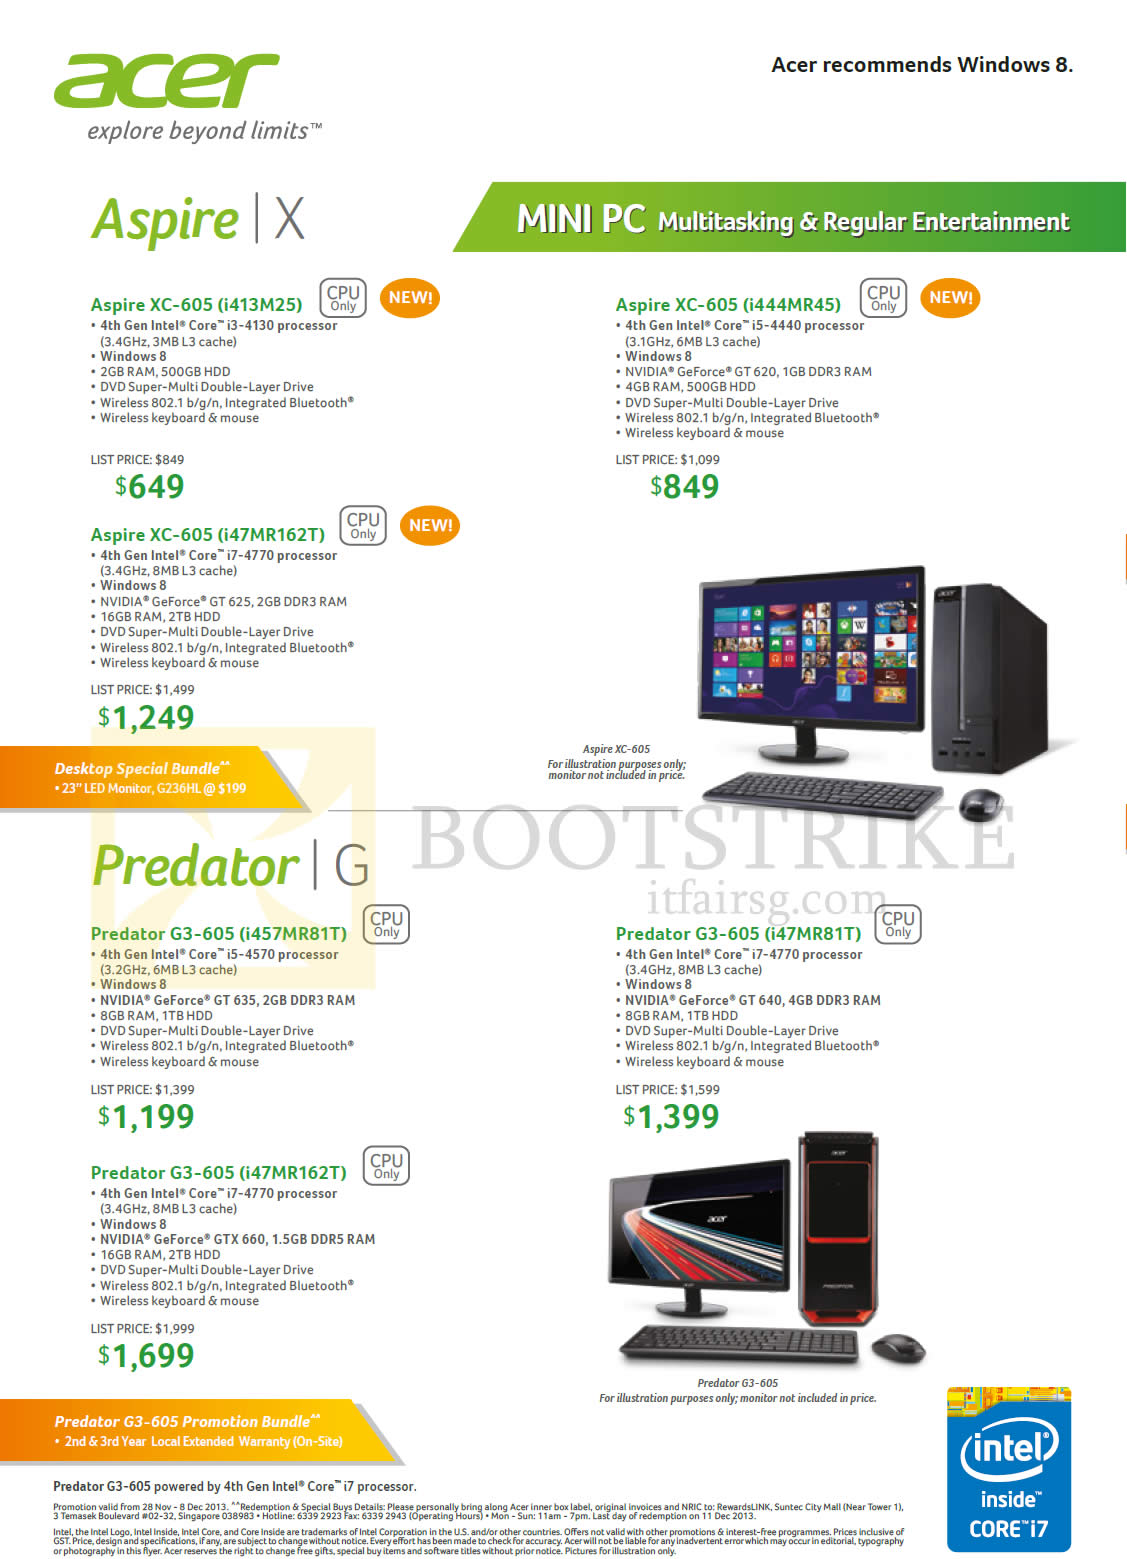 SITEX 2013 price list image brochure of Acer Desktop PCs Aspire XC-605, Predator G3-605